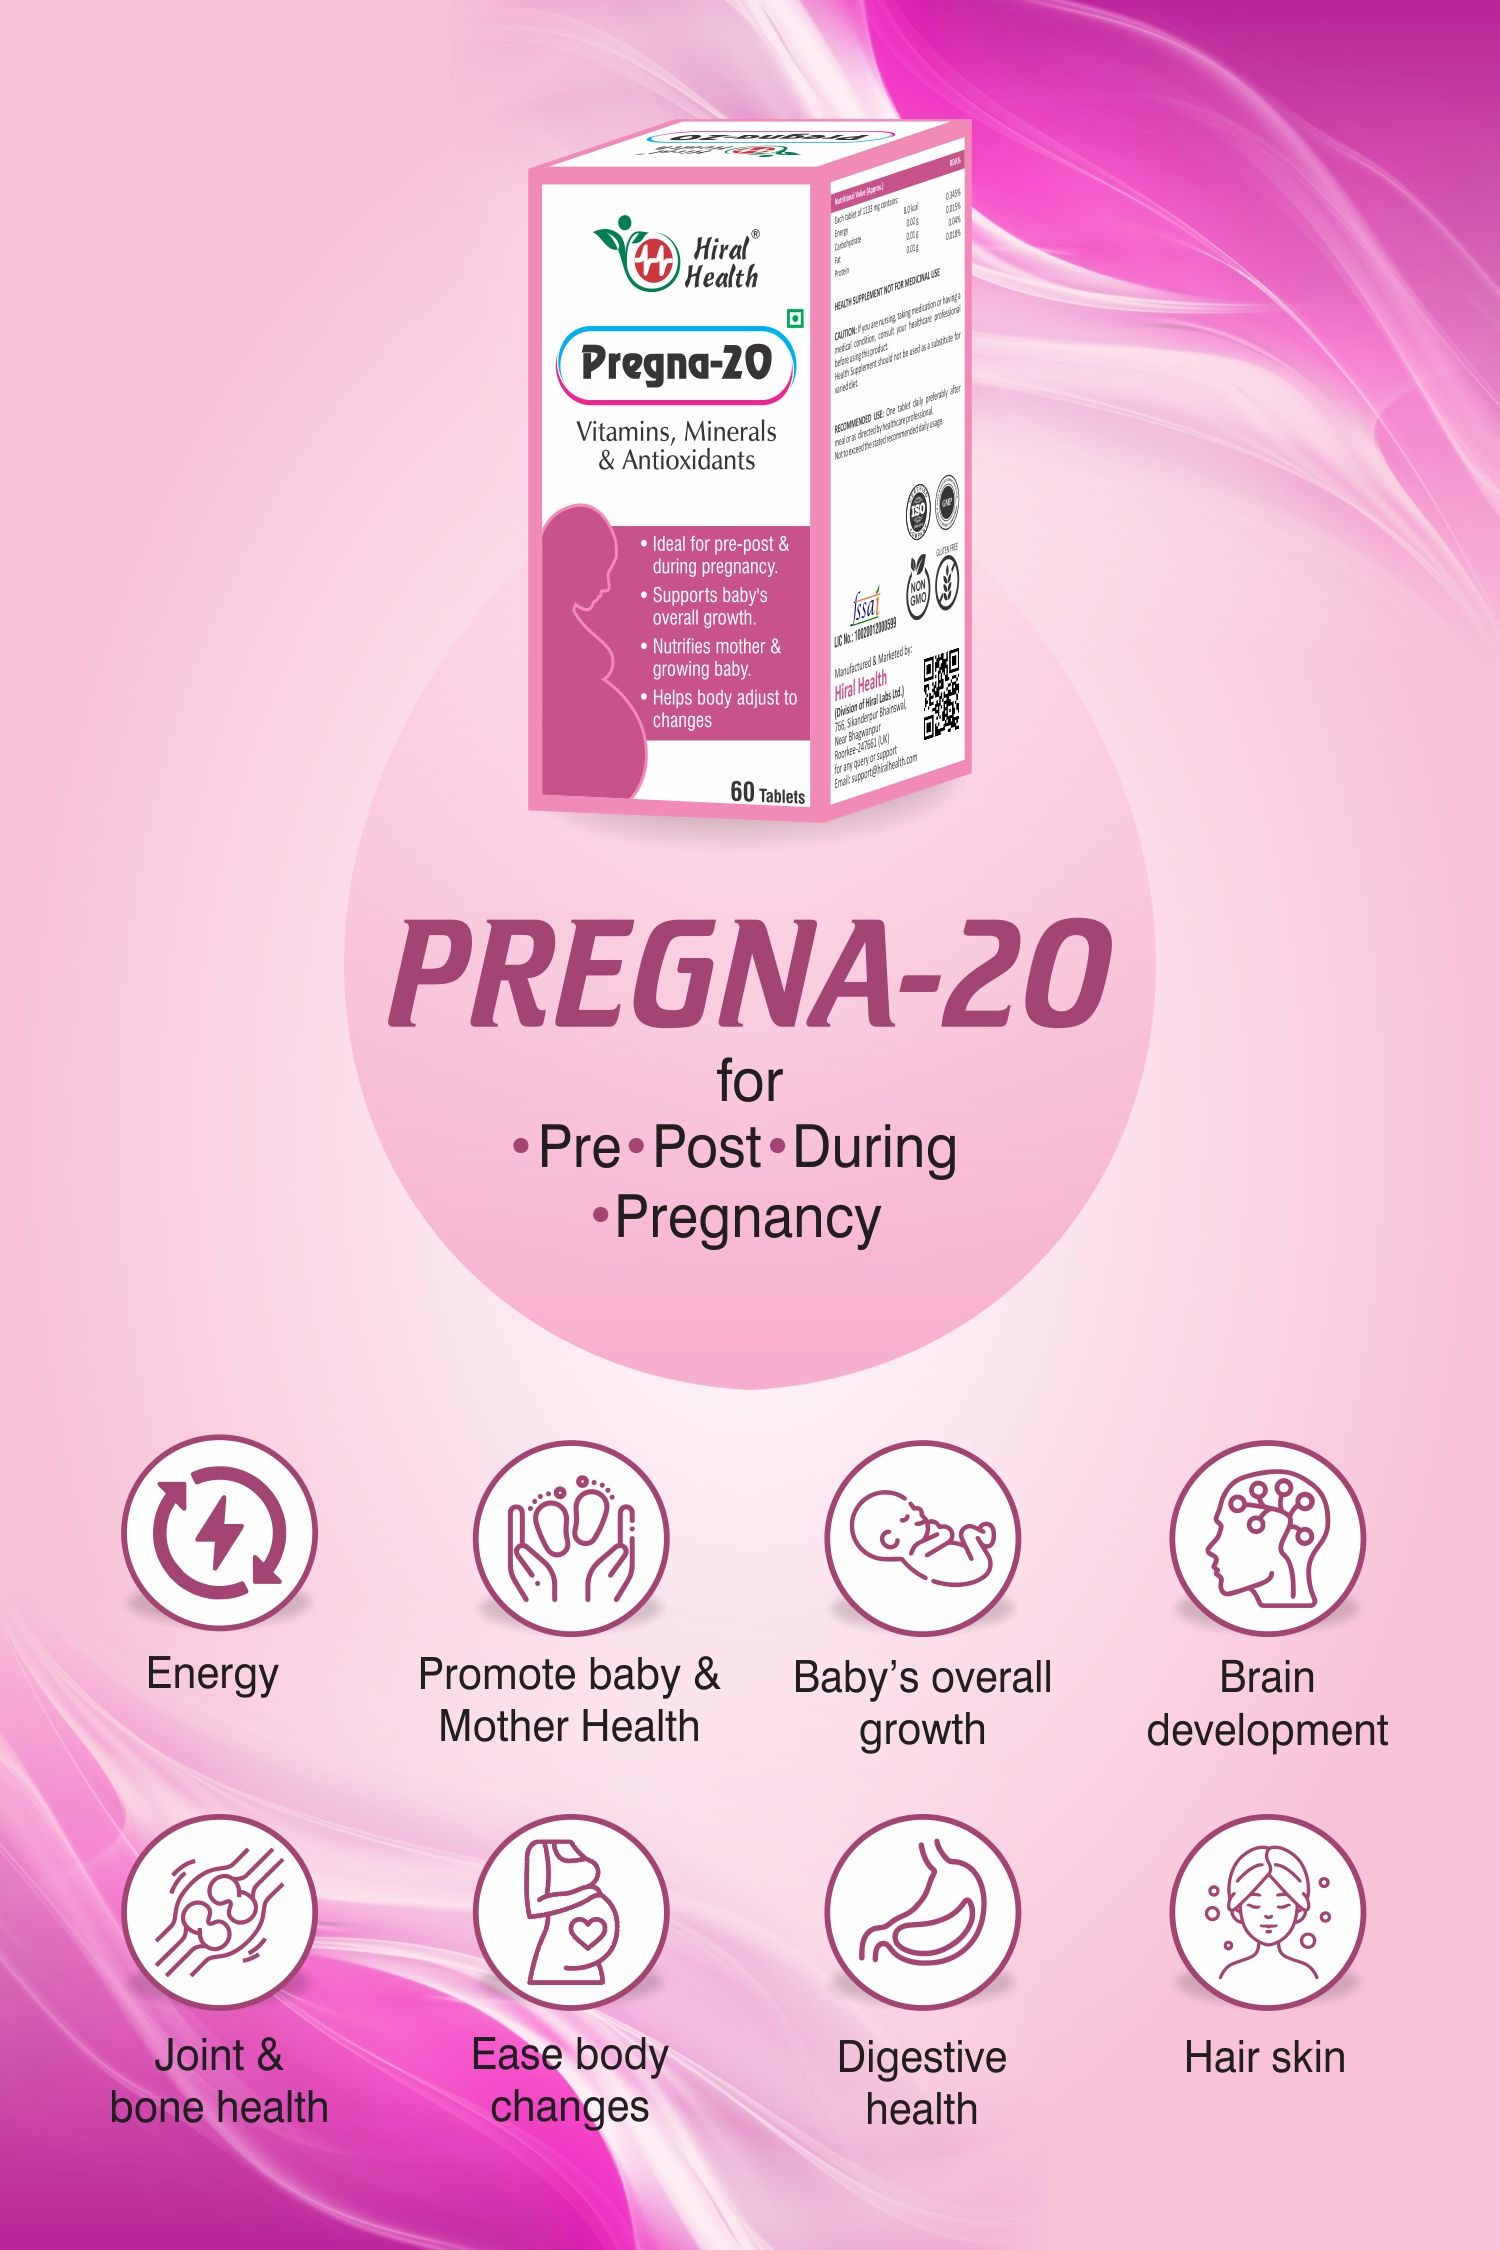 Pregna-20 benefits